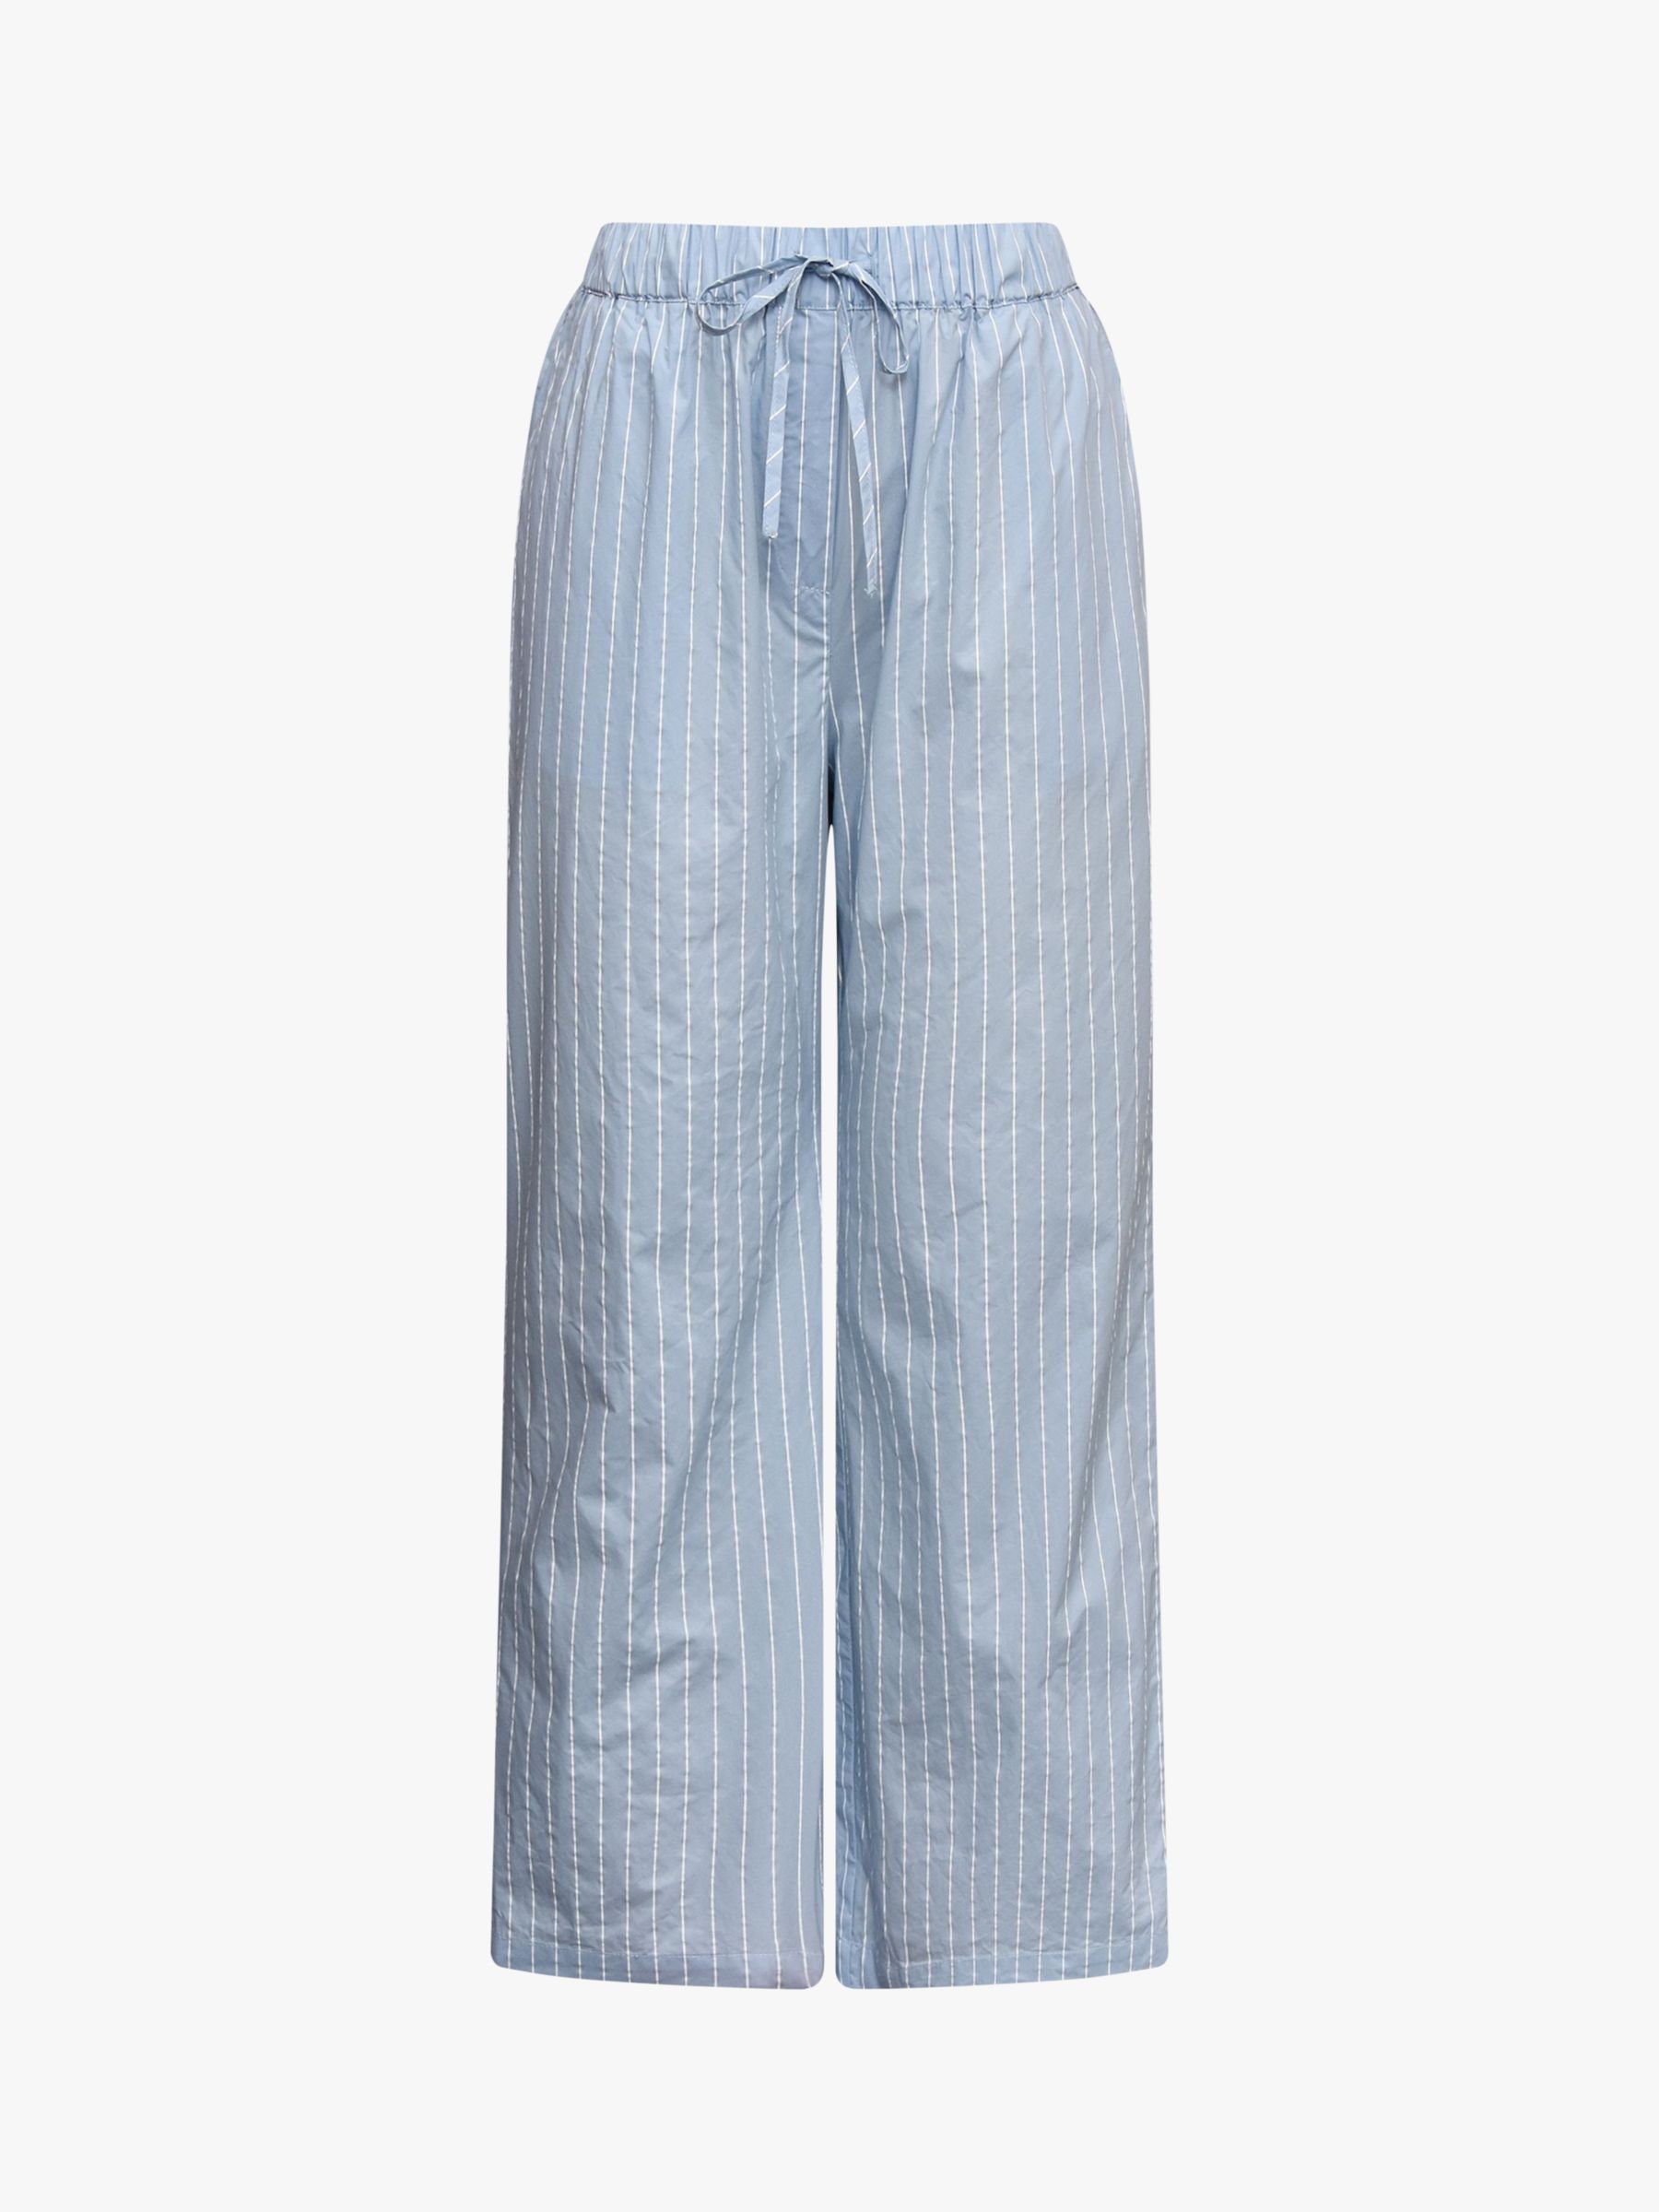 A-VIEW Brenda Trousers, Blue Stripe, 8